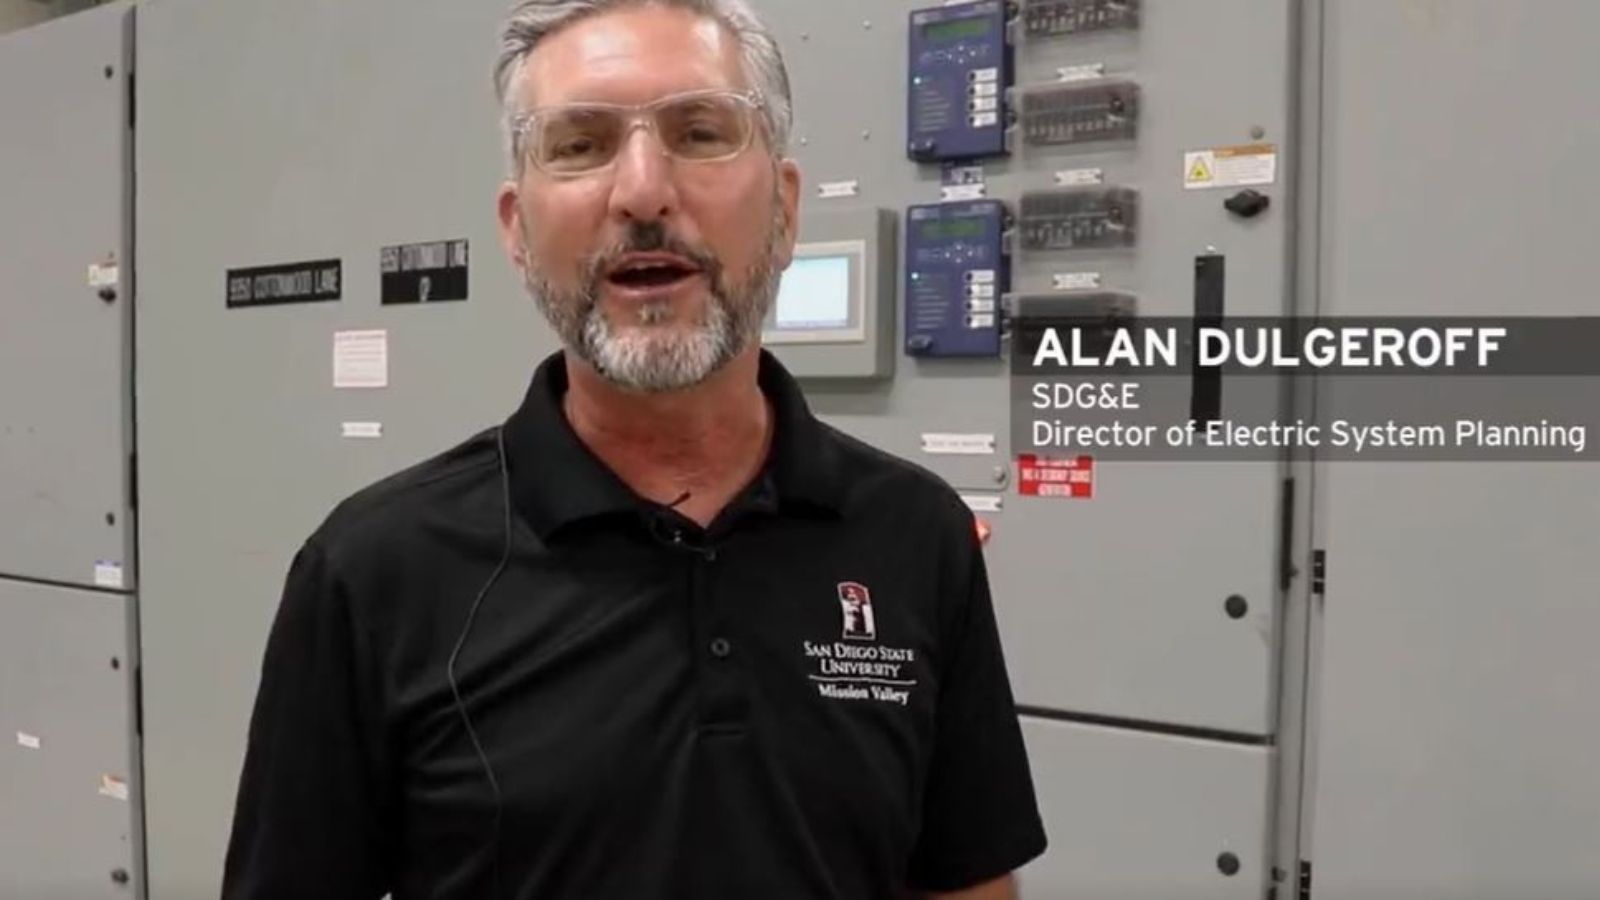 Portrait of Alan Dulgeroff, SDG&E Director of Electric System Planning